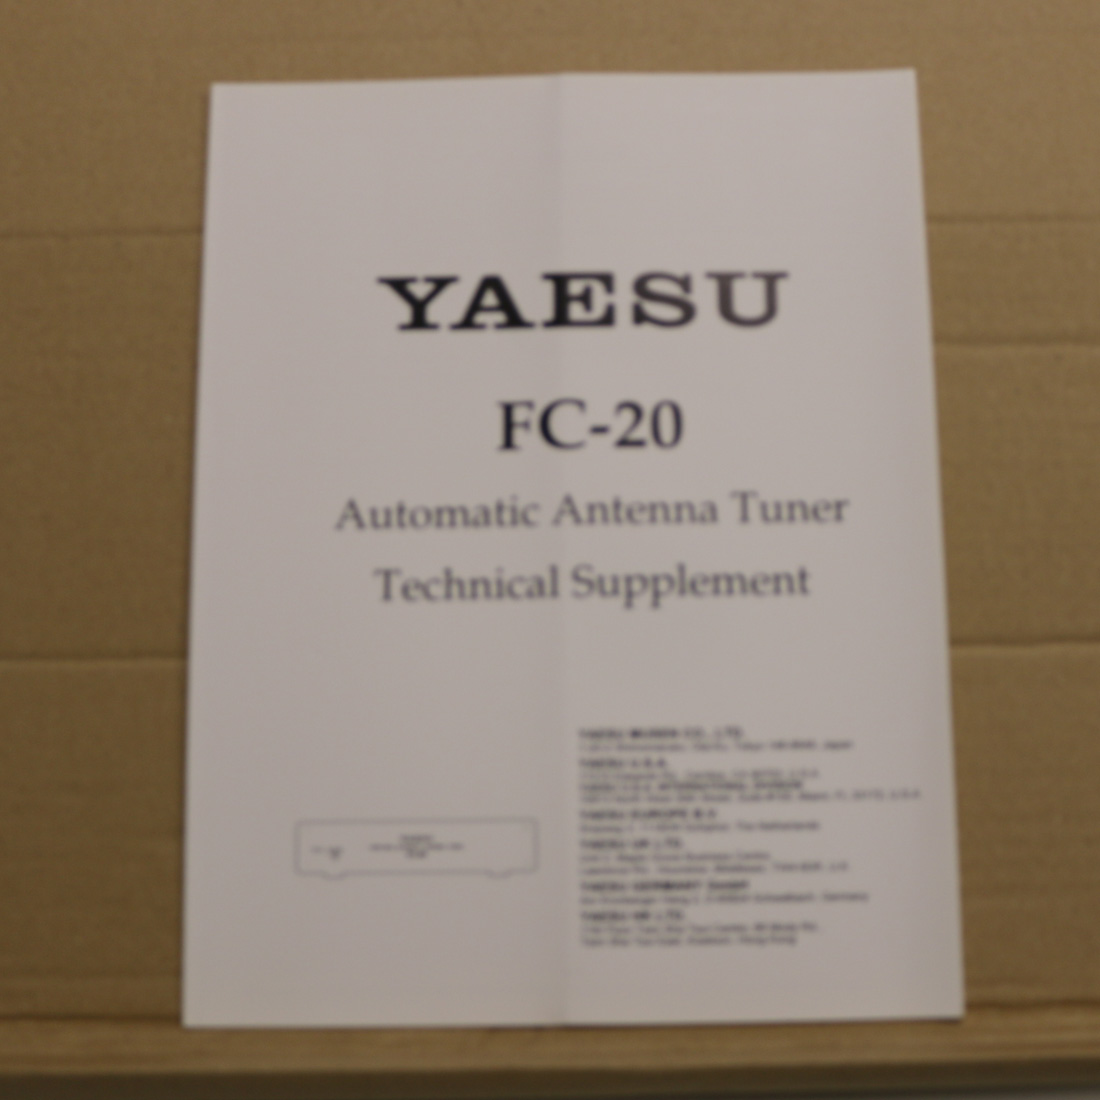 Yaesu FC-20 Technical Supplement